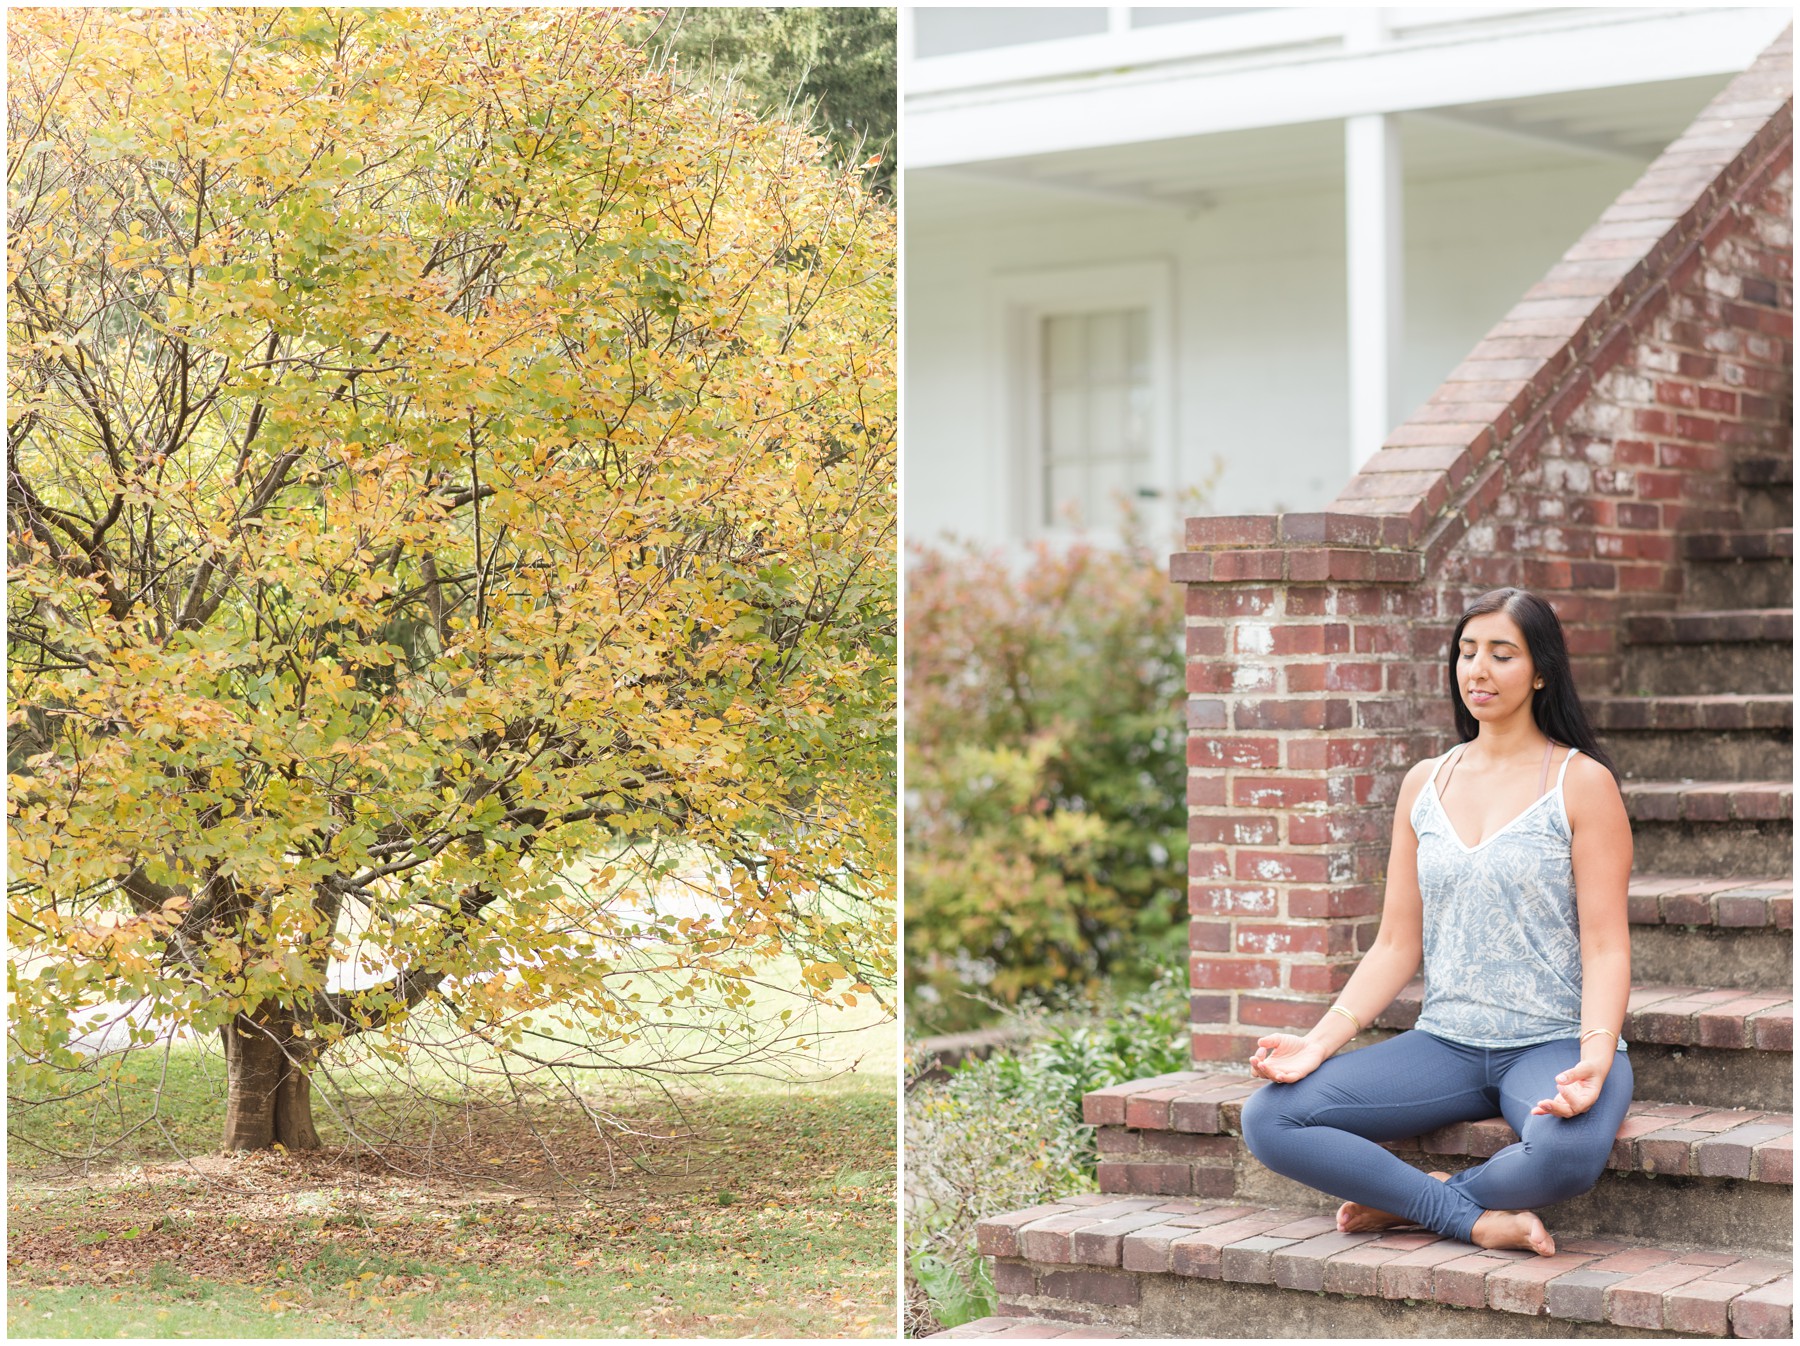 Sabina Grewal yoga poses at Blandy Arboretum by Jacqueline Morgan